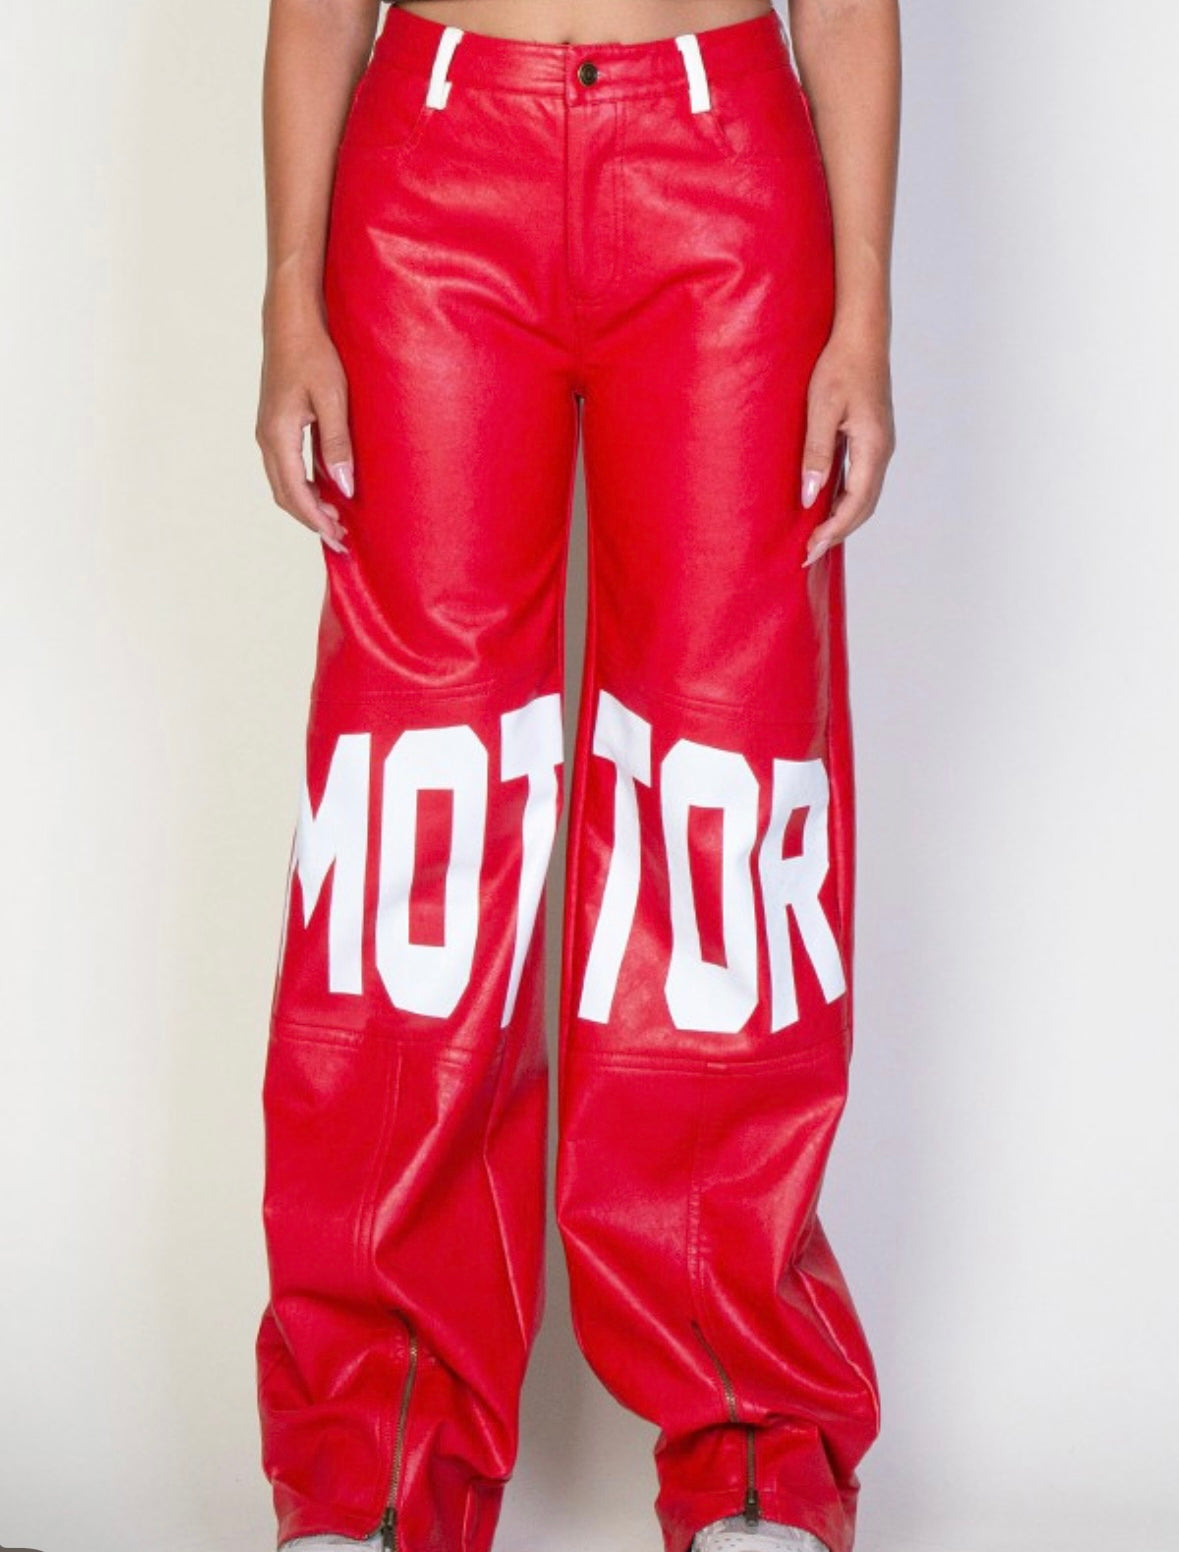 Motor Printed Leather Pants